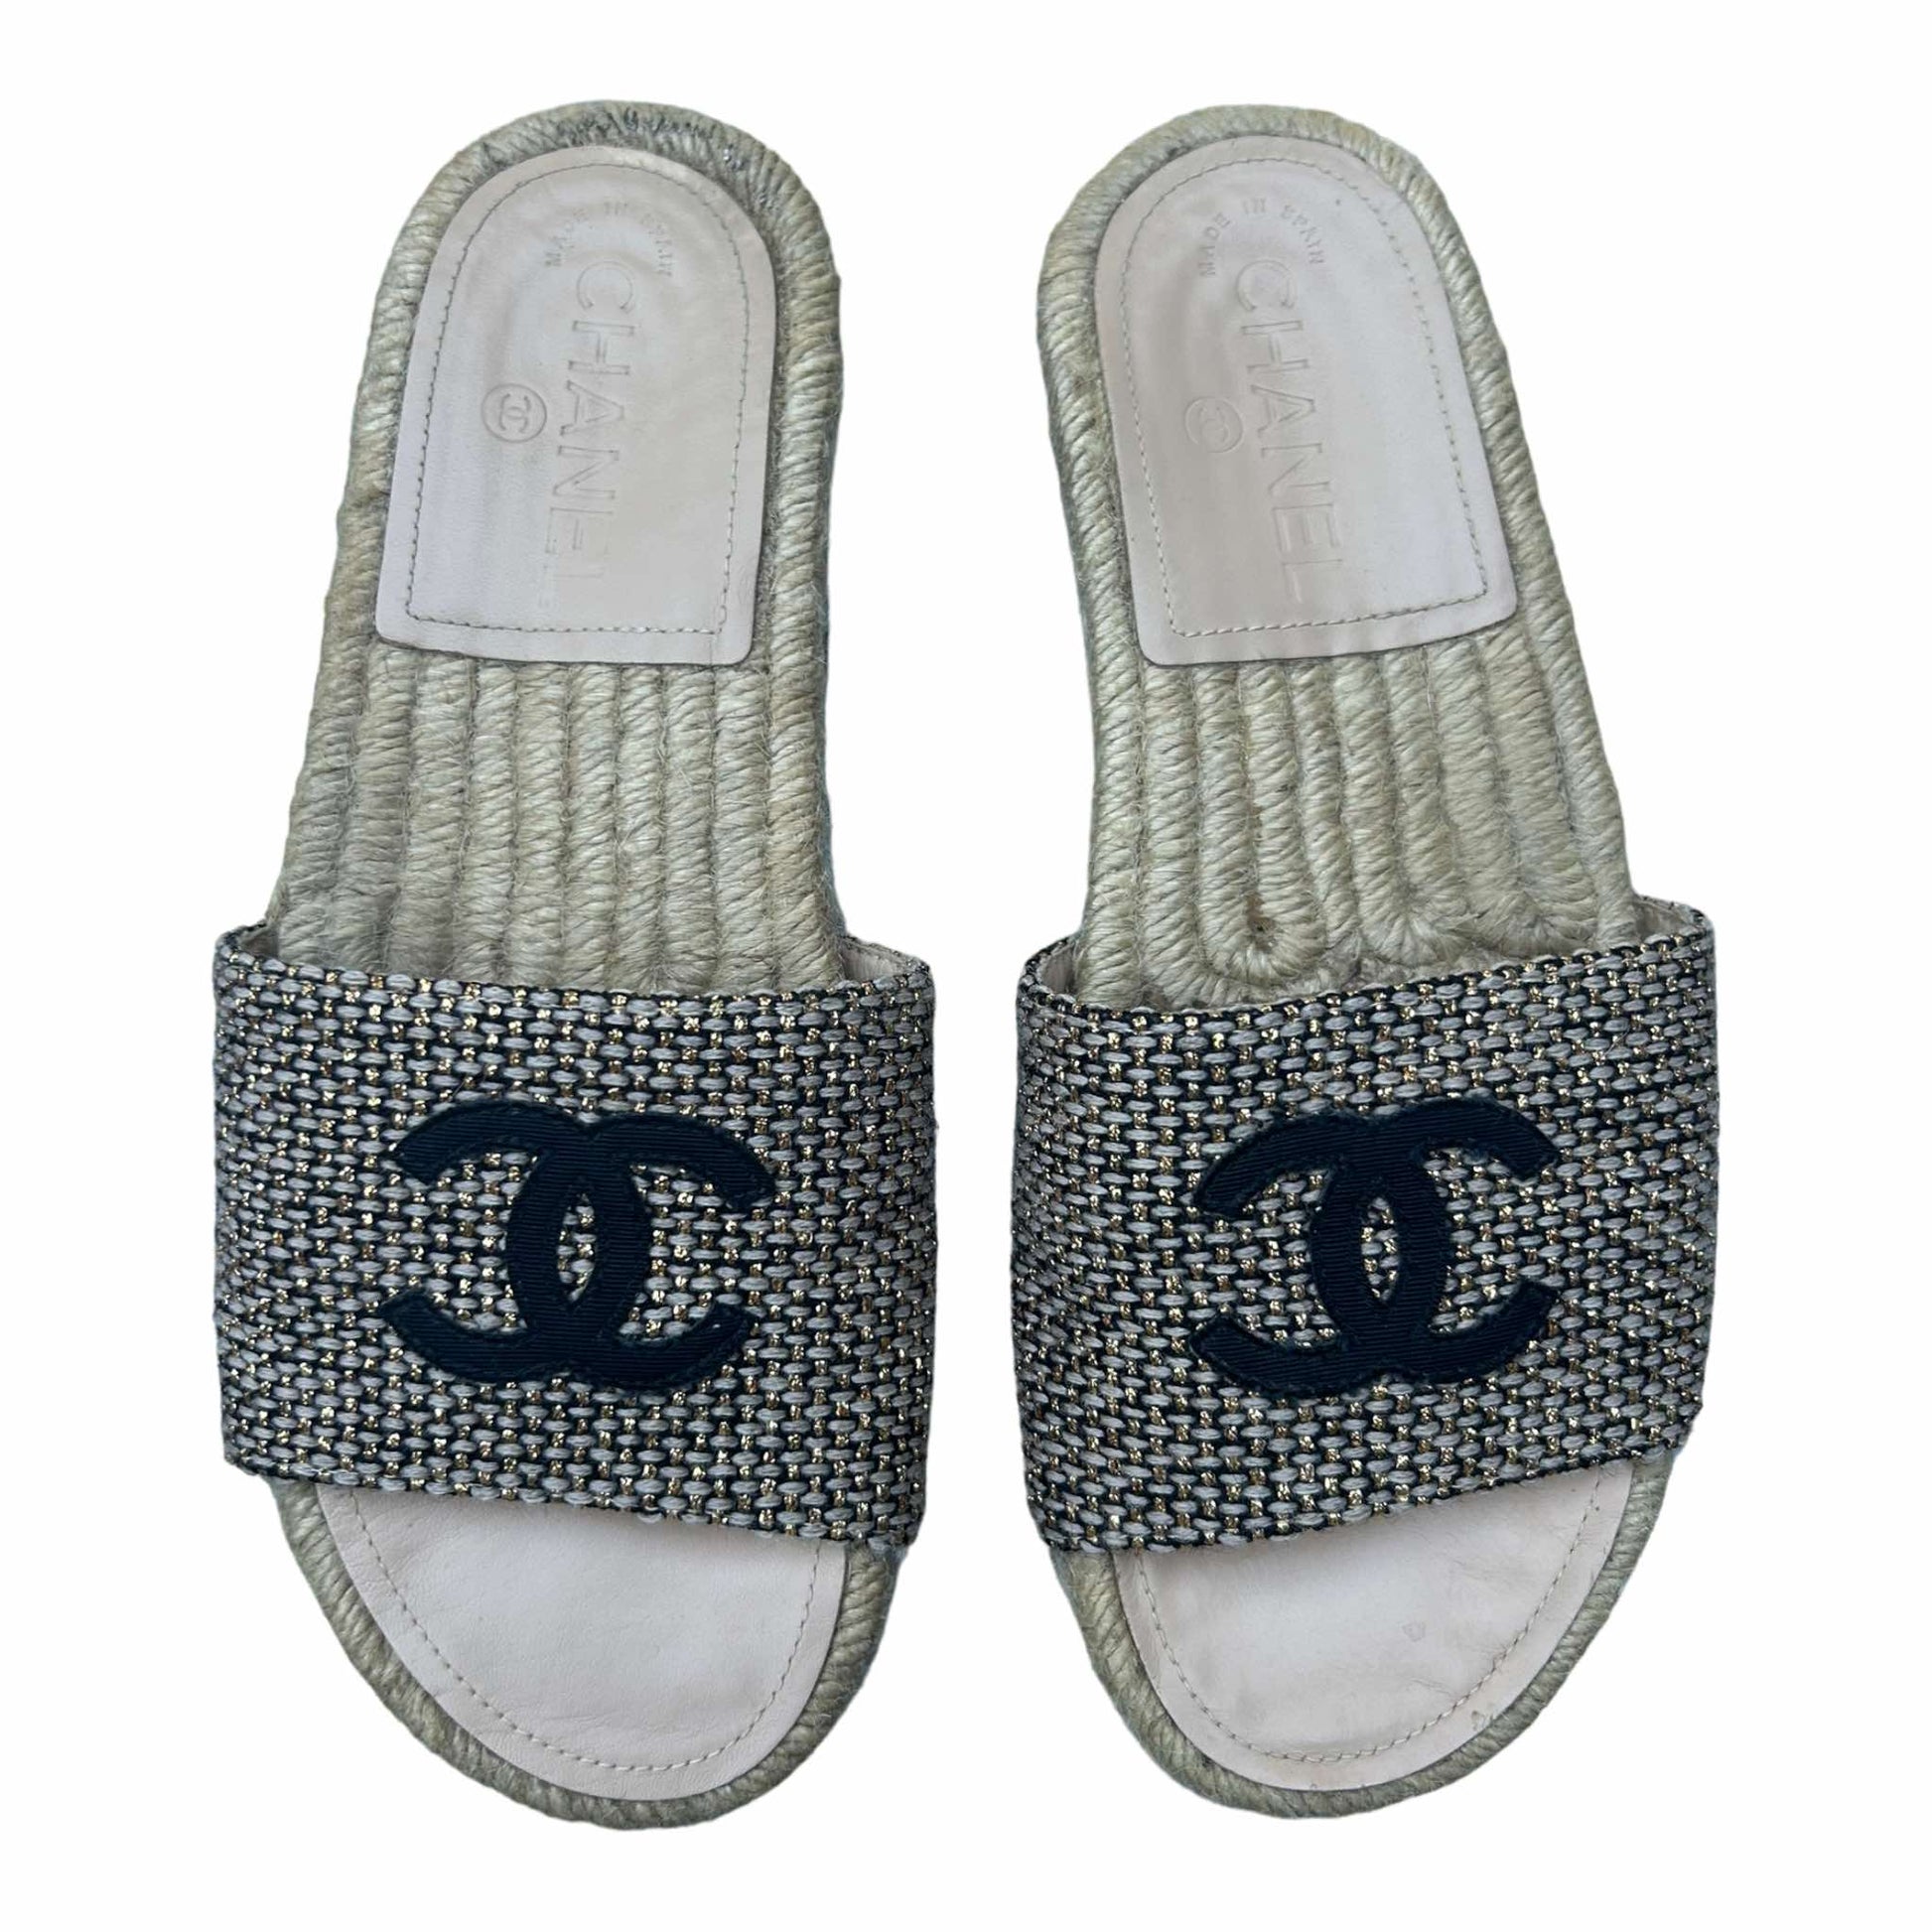 Chanel Espadrille Sandals - EU 37 / UK 4